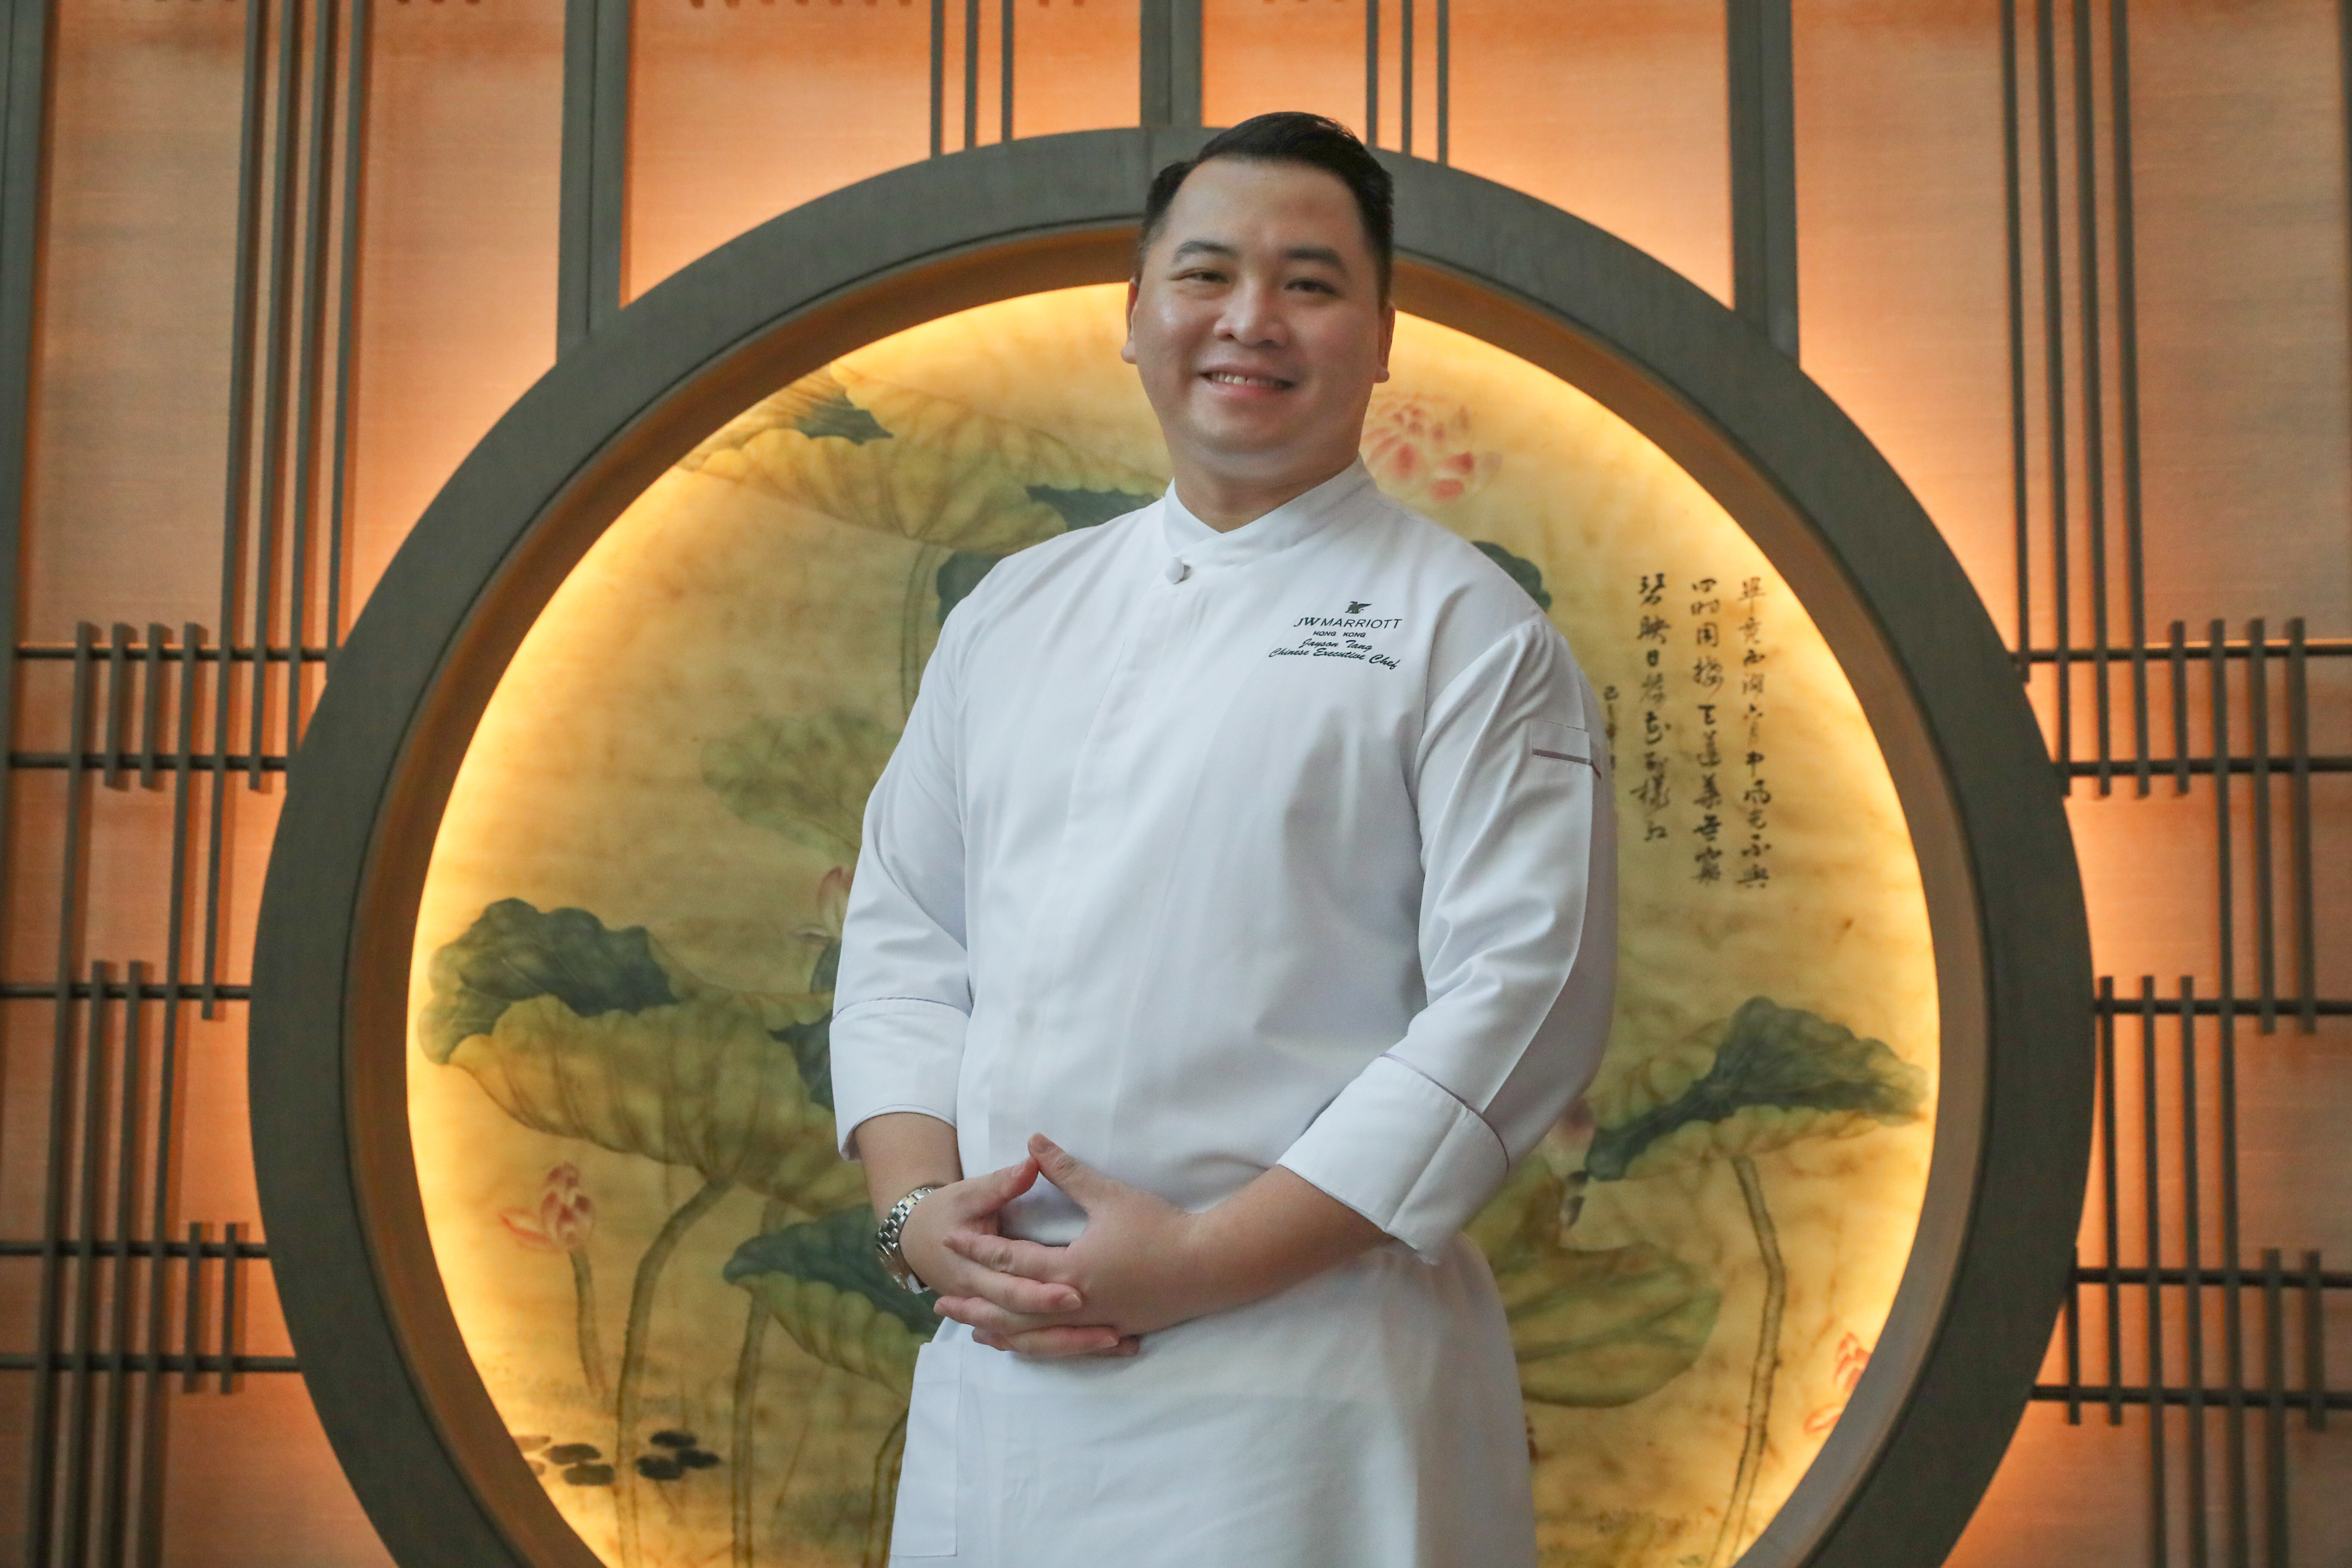 Jayson Tang, executive chef at Man Ho Chinese Restaurant at the JW Marriott. Photo: Edmond So